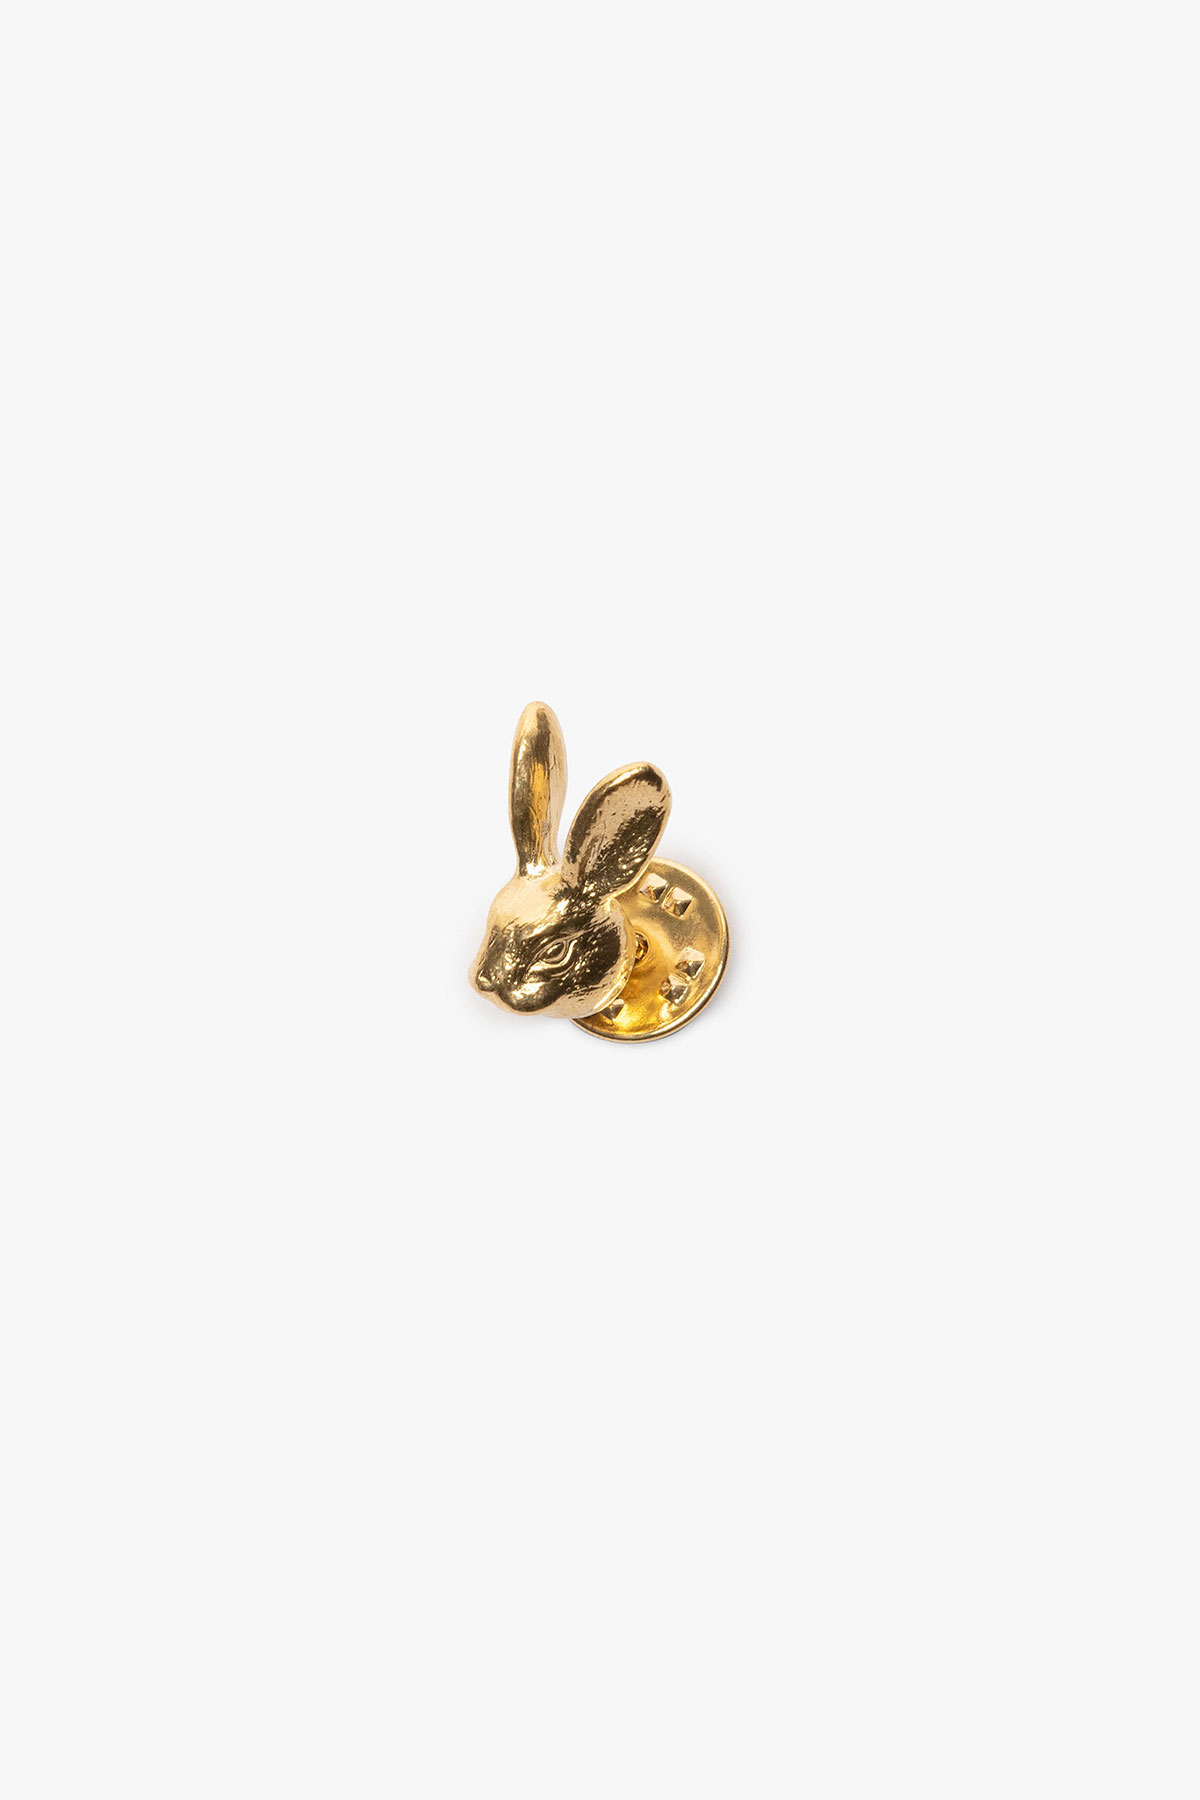 Rabbit head pin (copia)